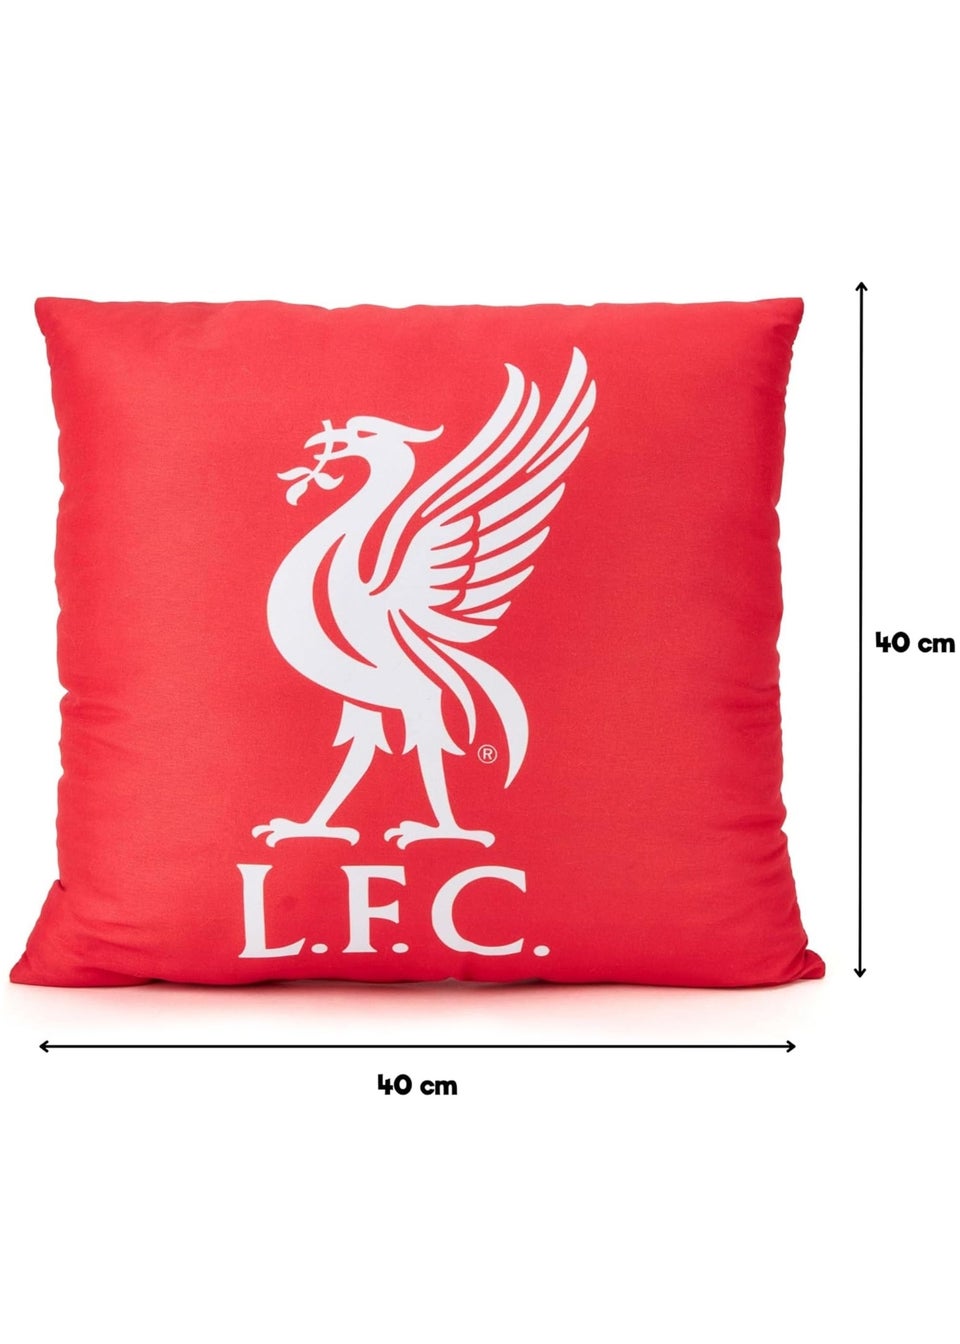 Liverpool FC Square Cushion